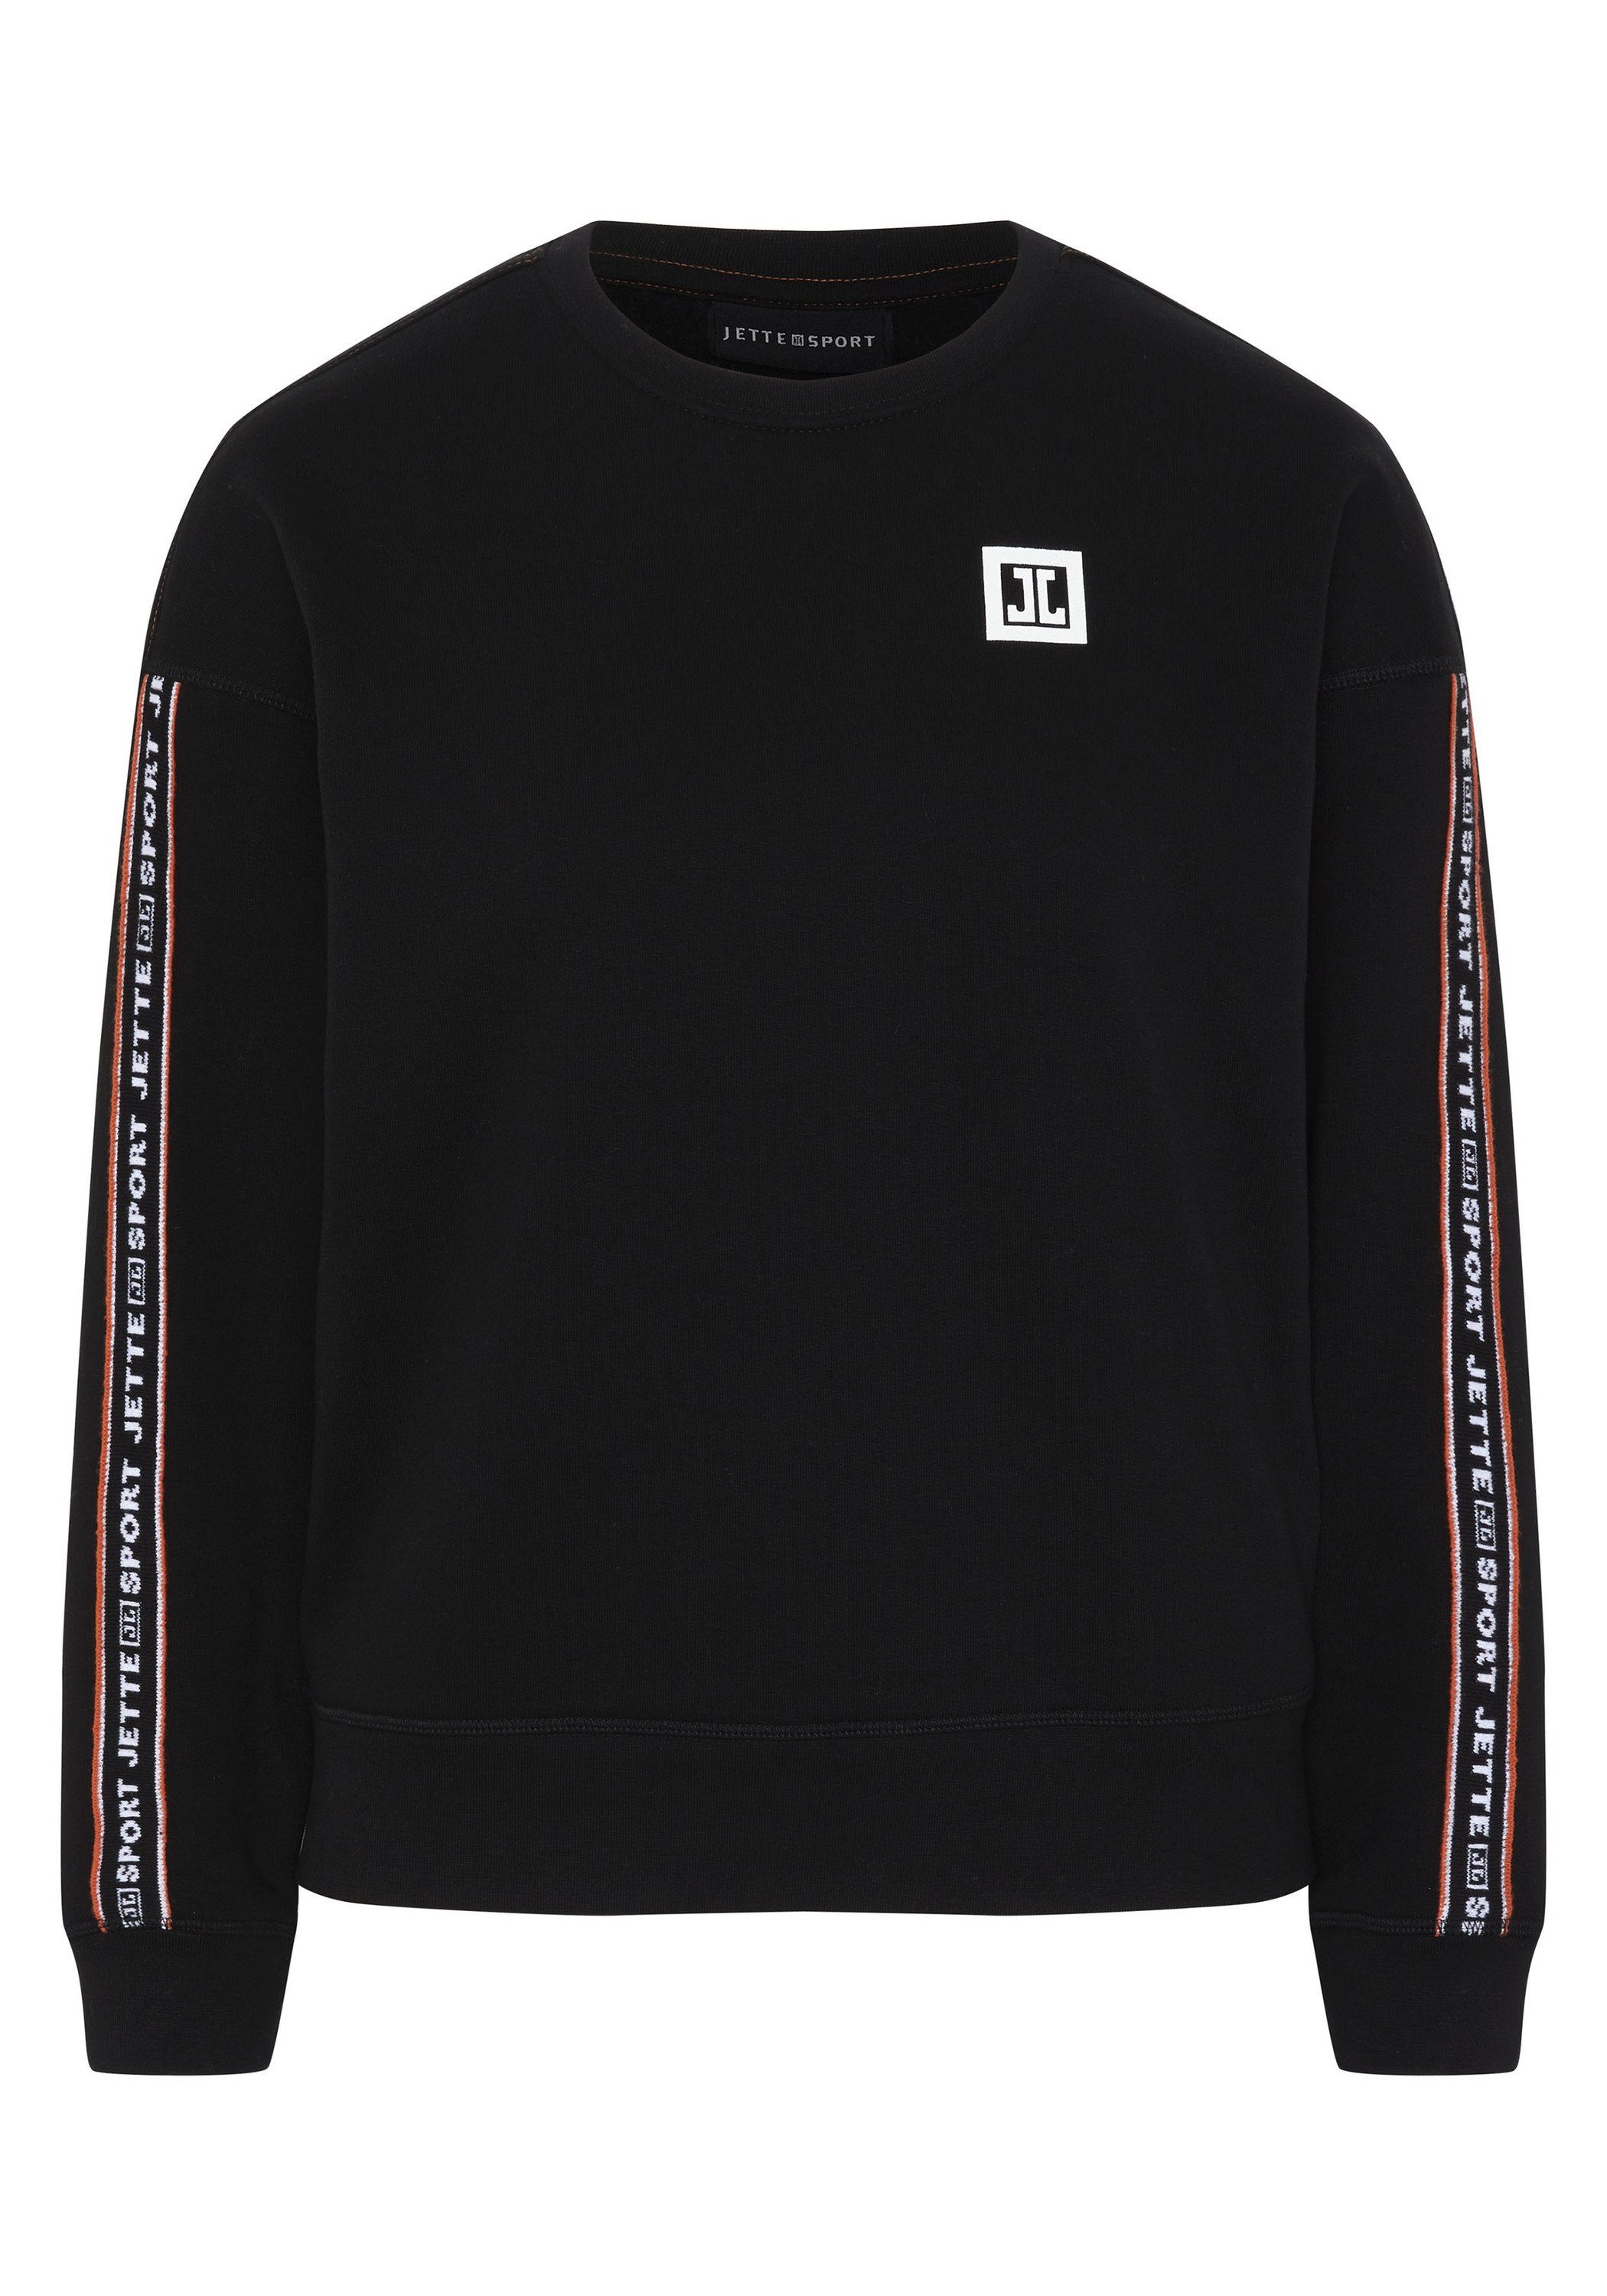 JETTE SPORT Deep Sweatshirt im 19-3911 Black Label-Design